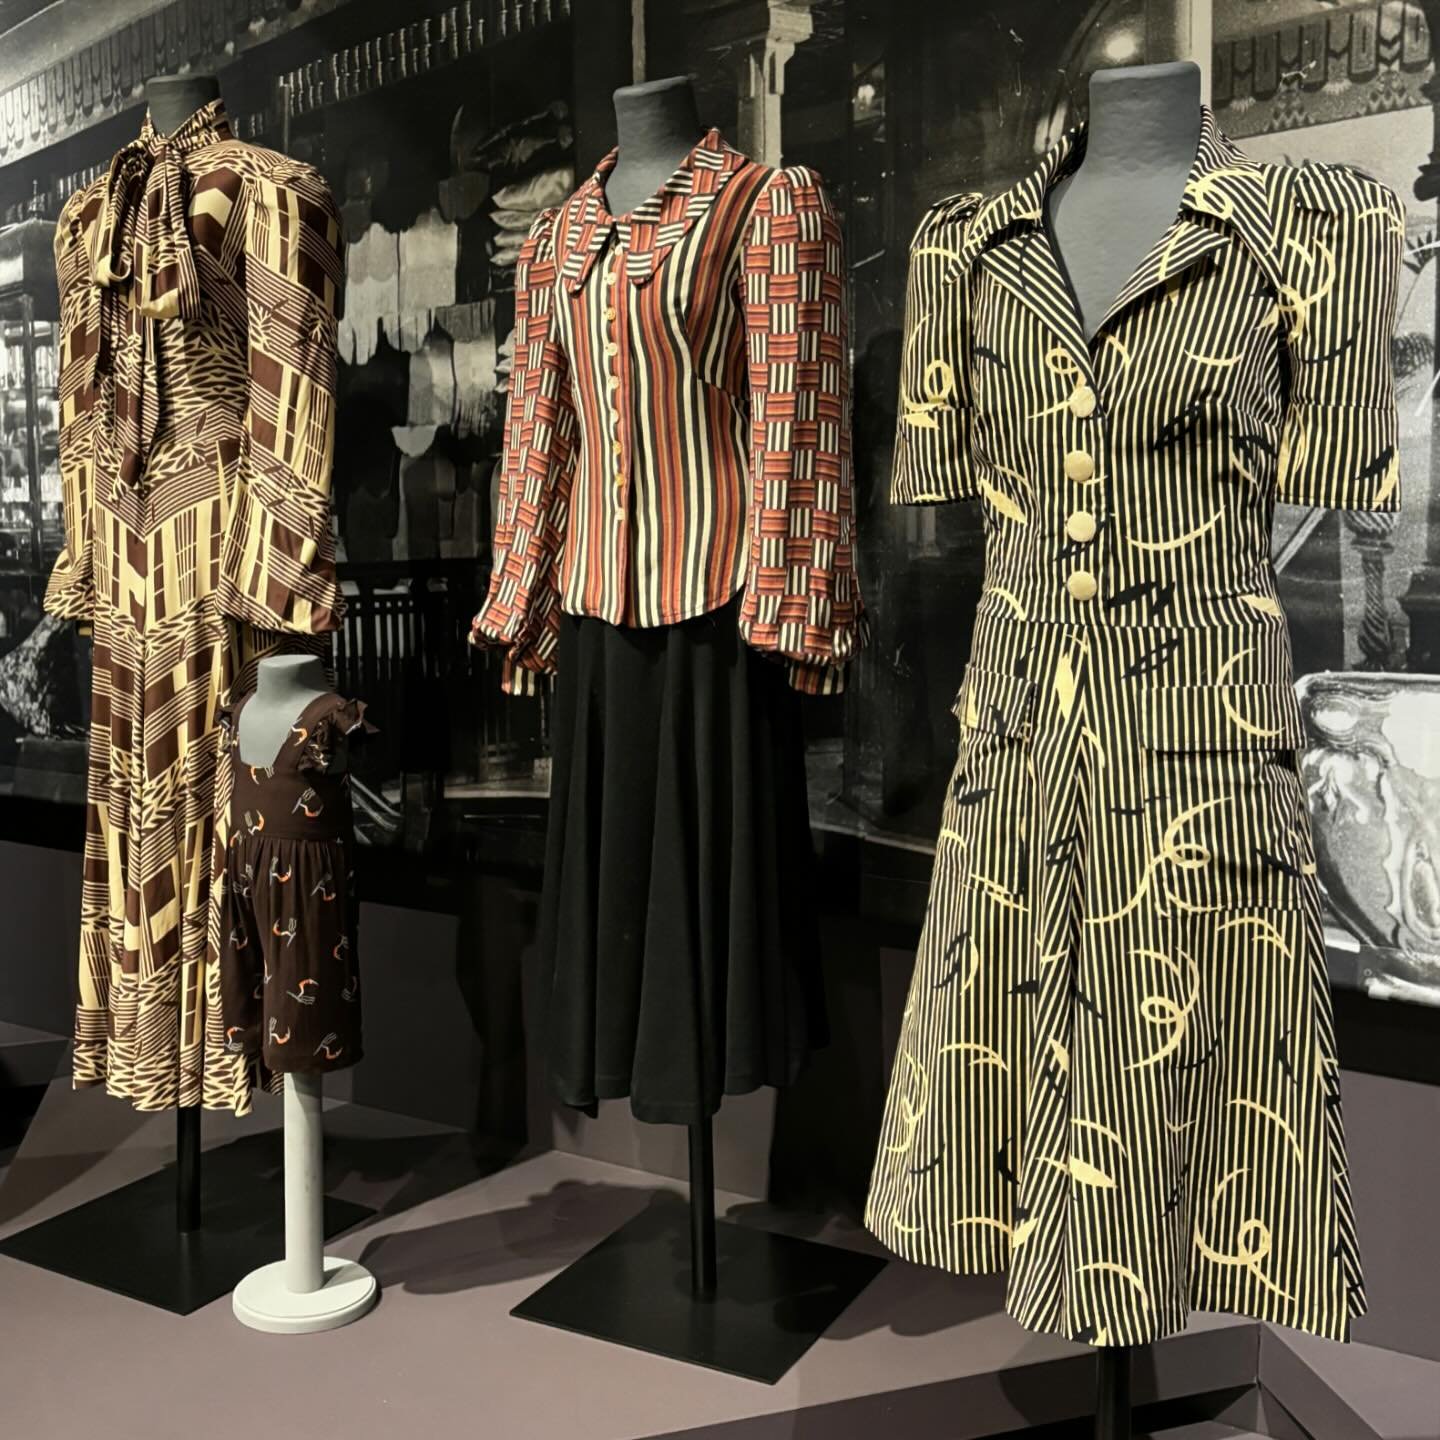 Finally made it to The Biba Story, 1964-1975 @fashiontextilemuseum ✨ On until September!

#biba #thebibastory #fashionhistory